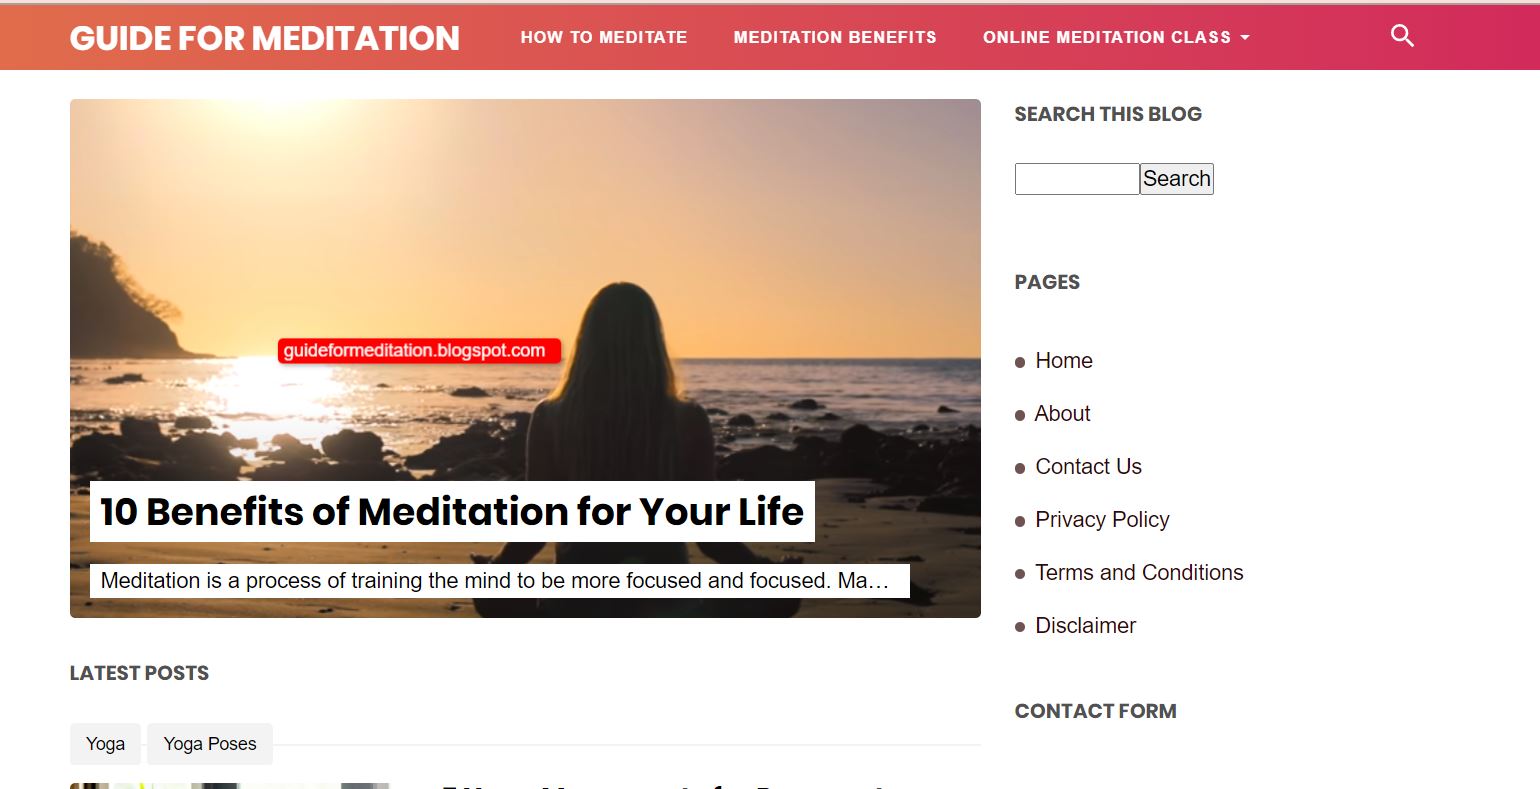 Guide For Meditation